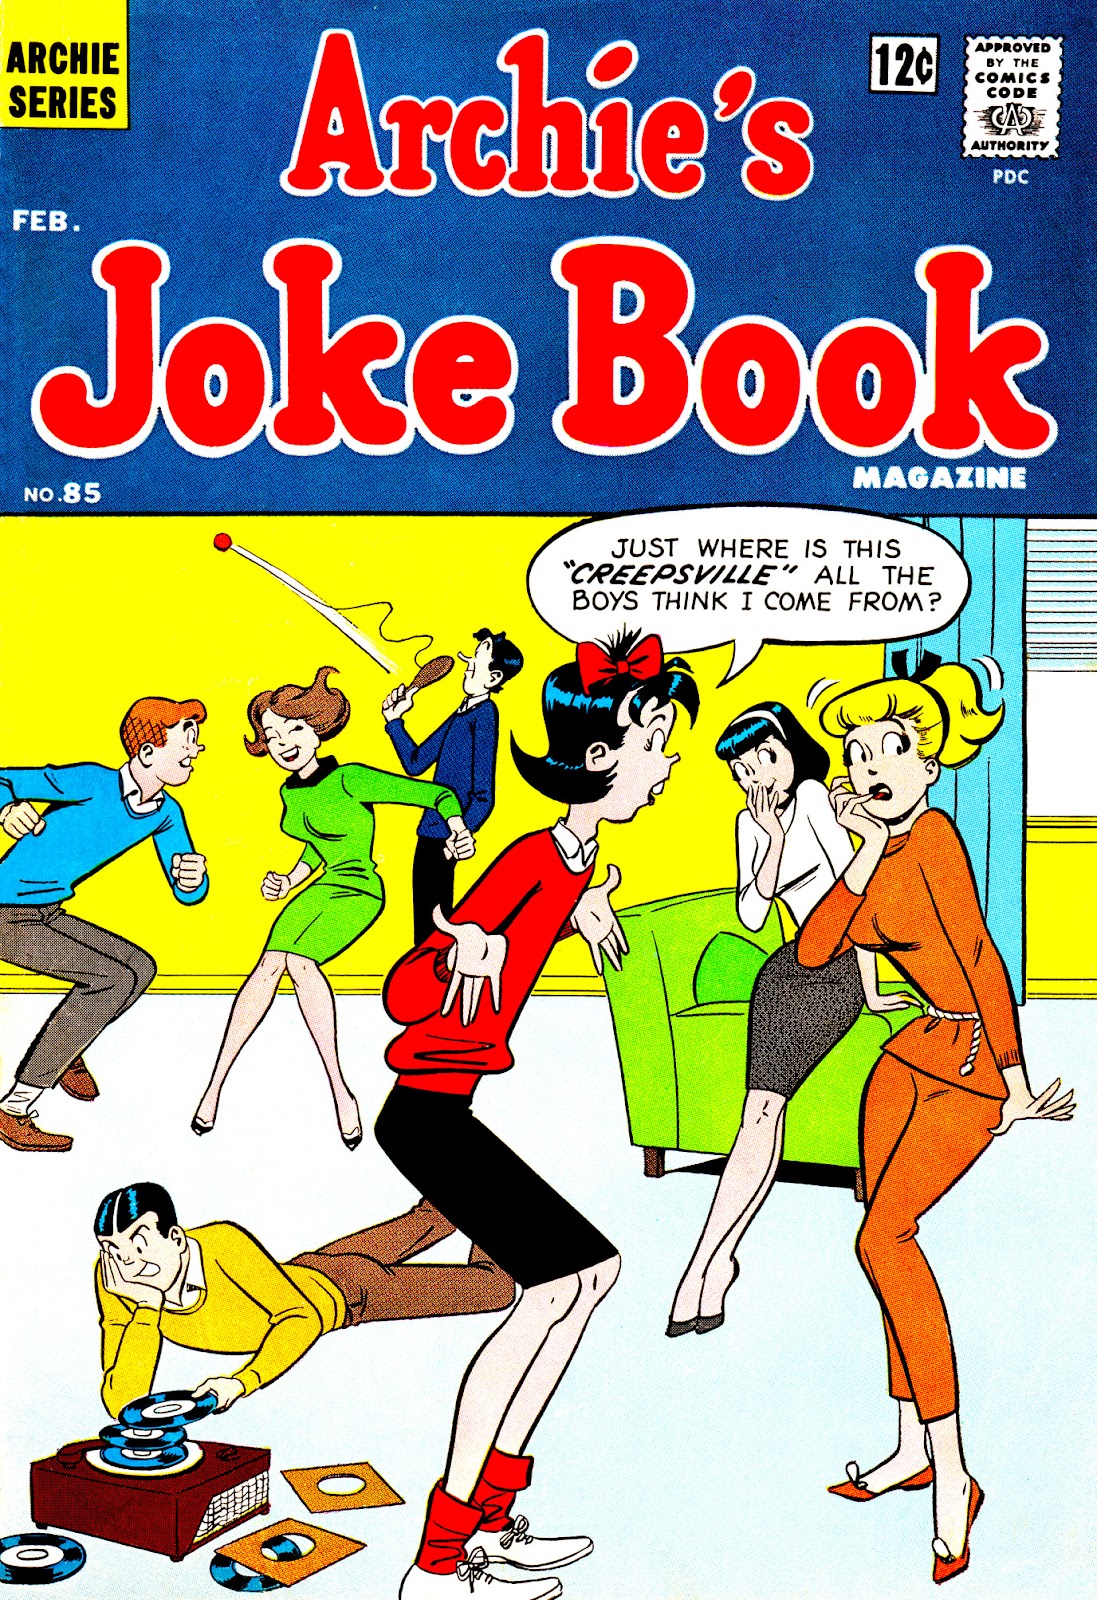 Archie's Joke Book Magazine 85 Page 1